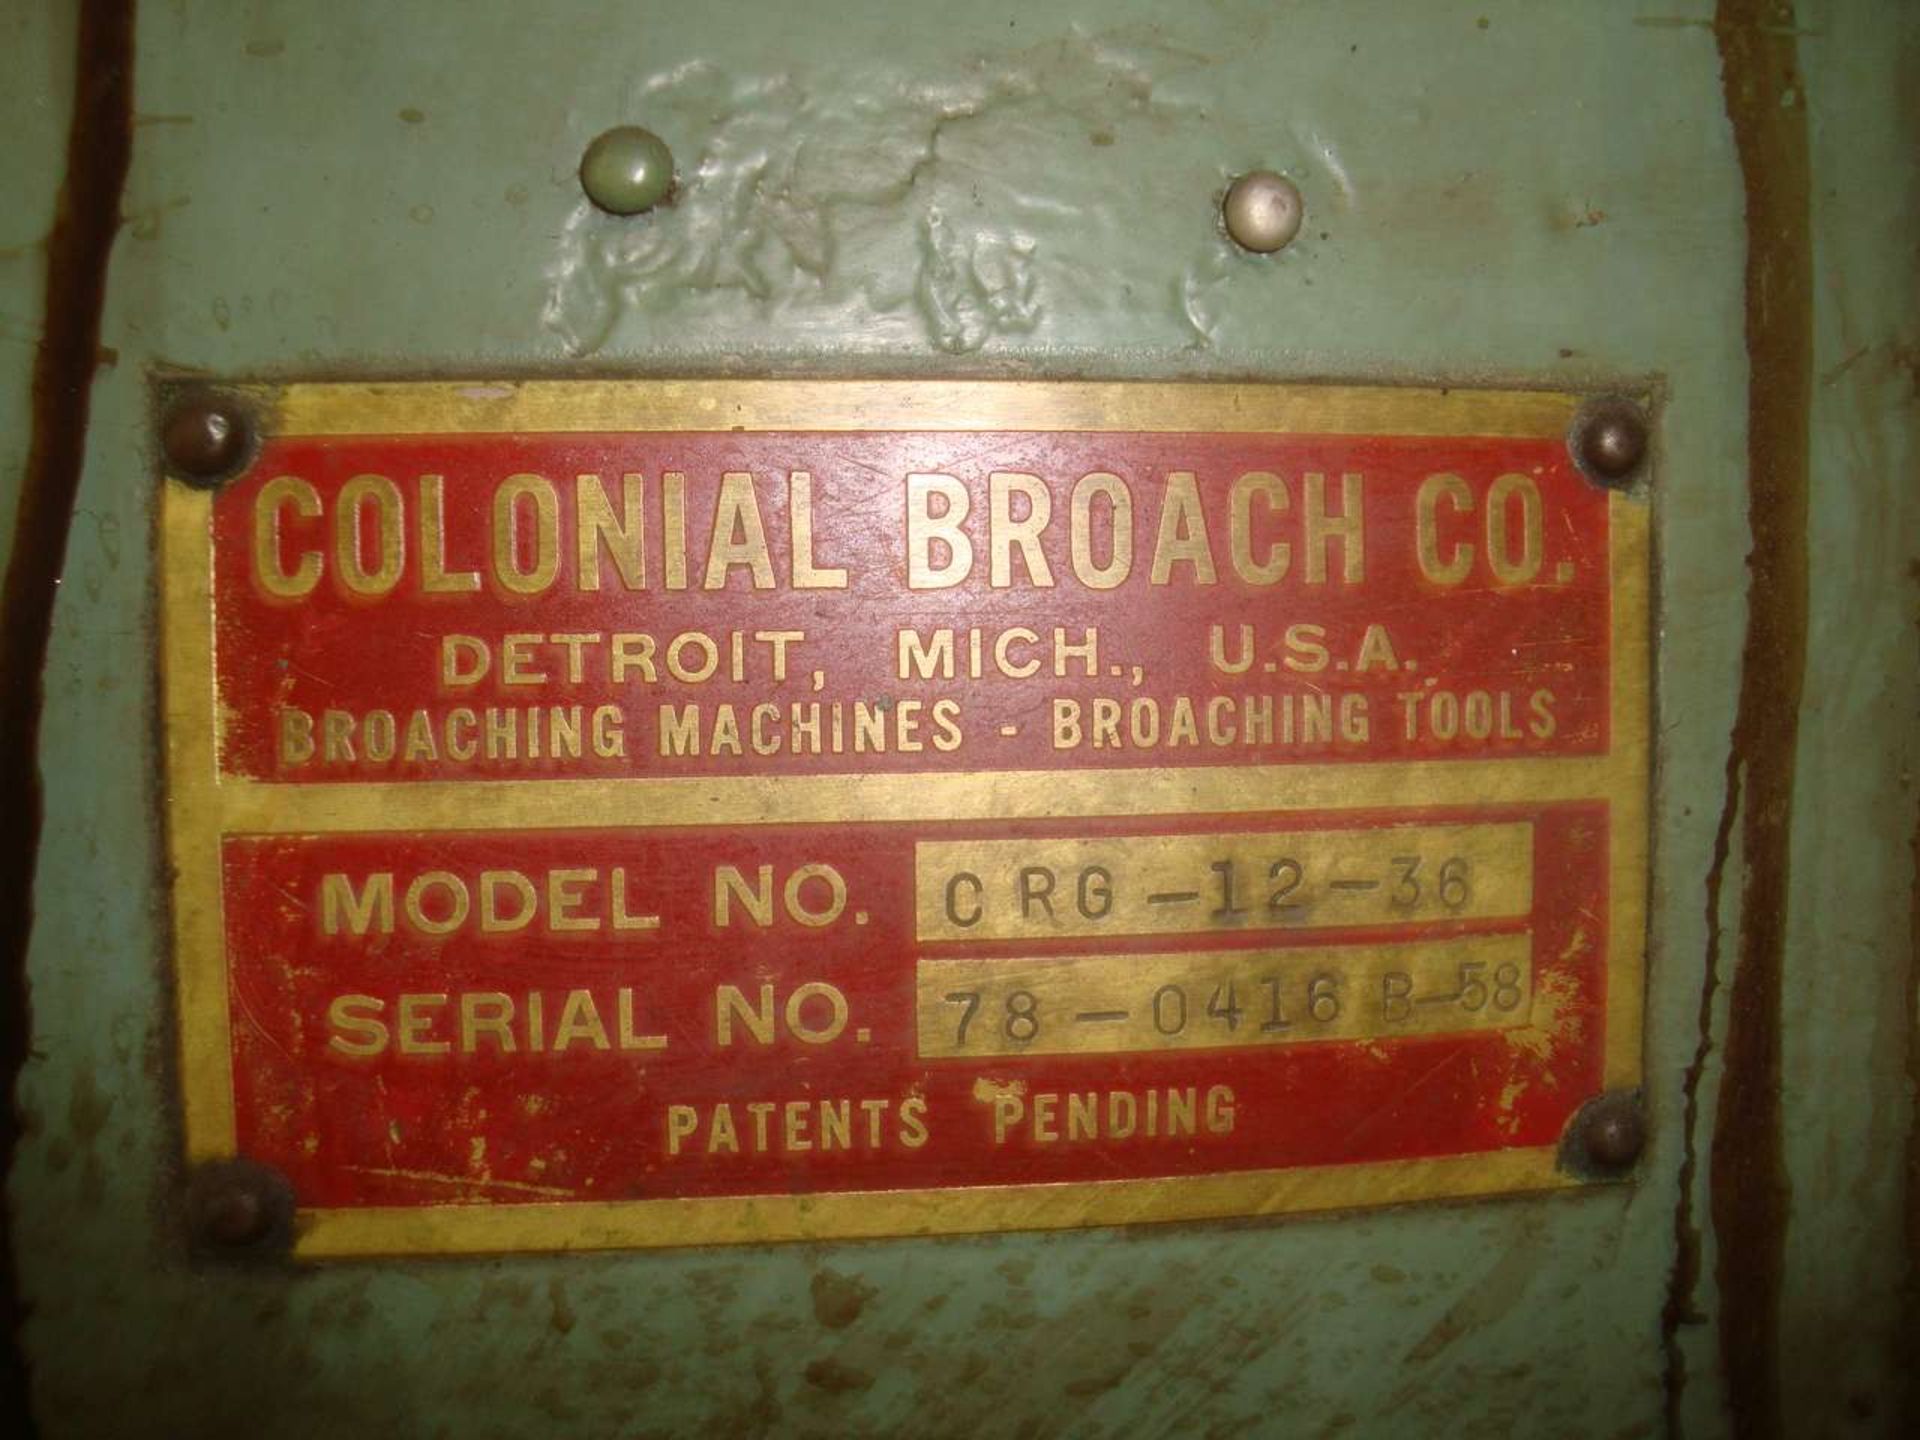 Colonial CRG-12-36 Broach Grinder - Image 4 of 4